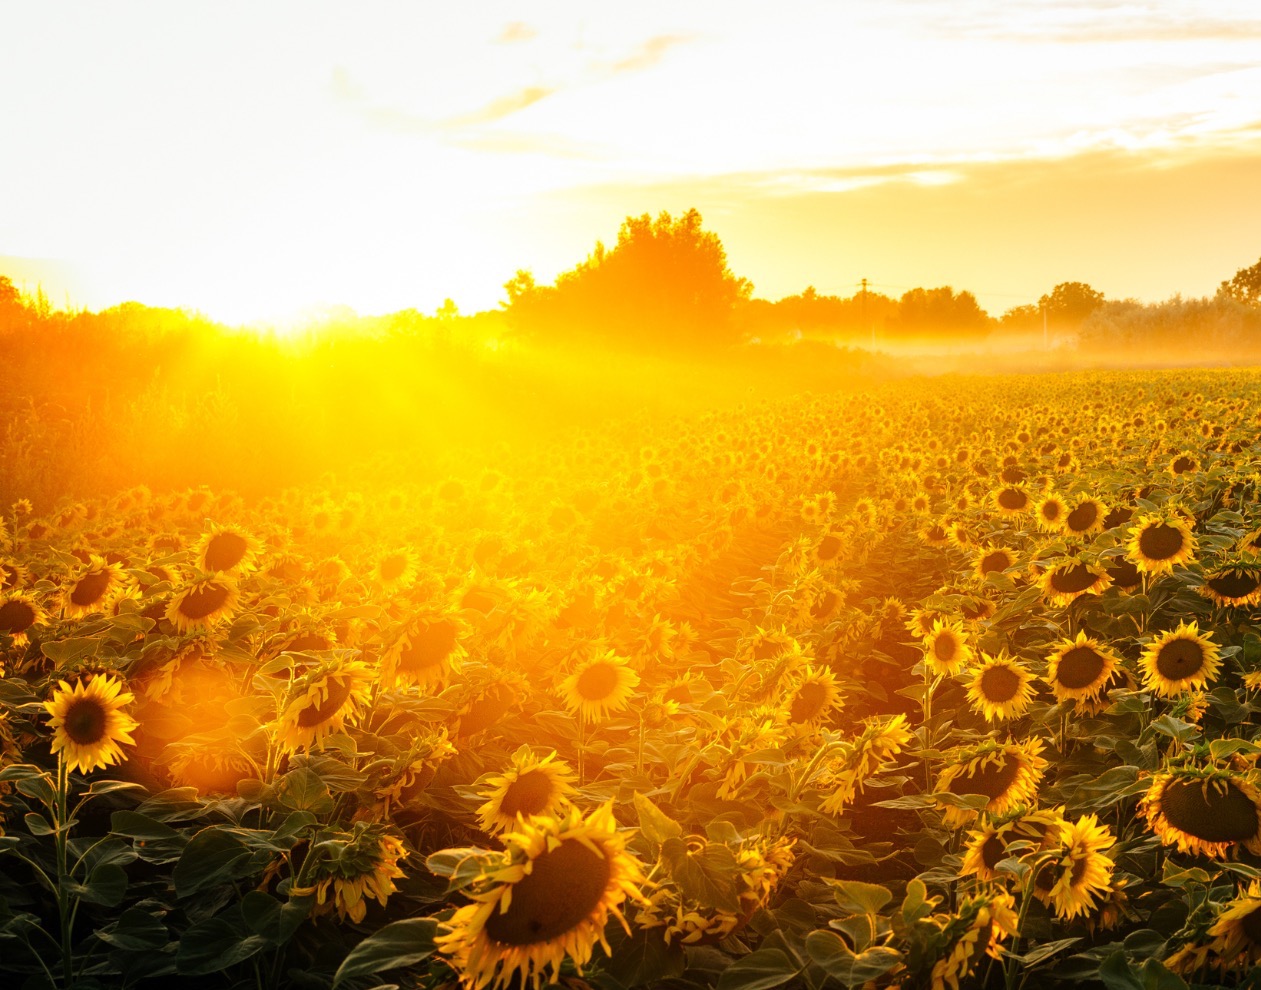 golden hour in sunflower field by Bijelic Leon